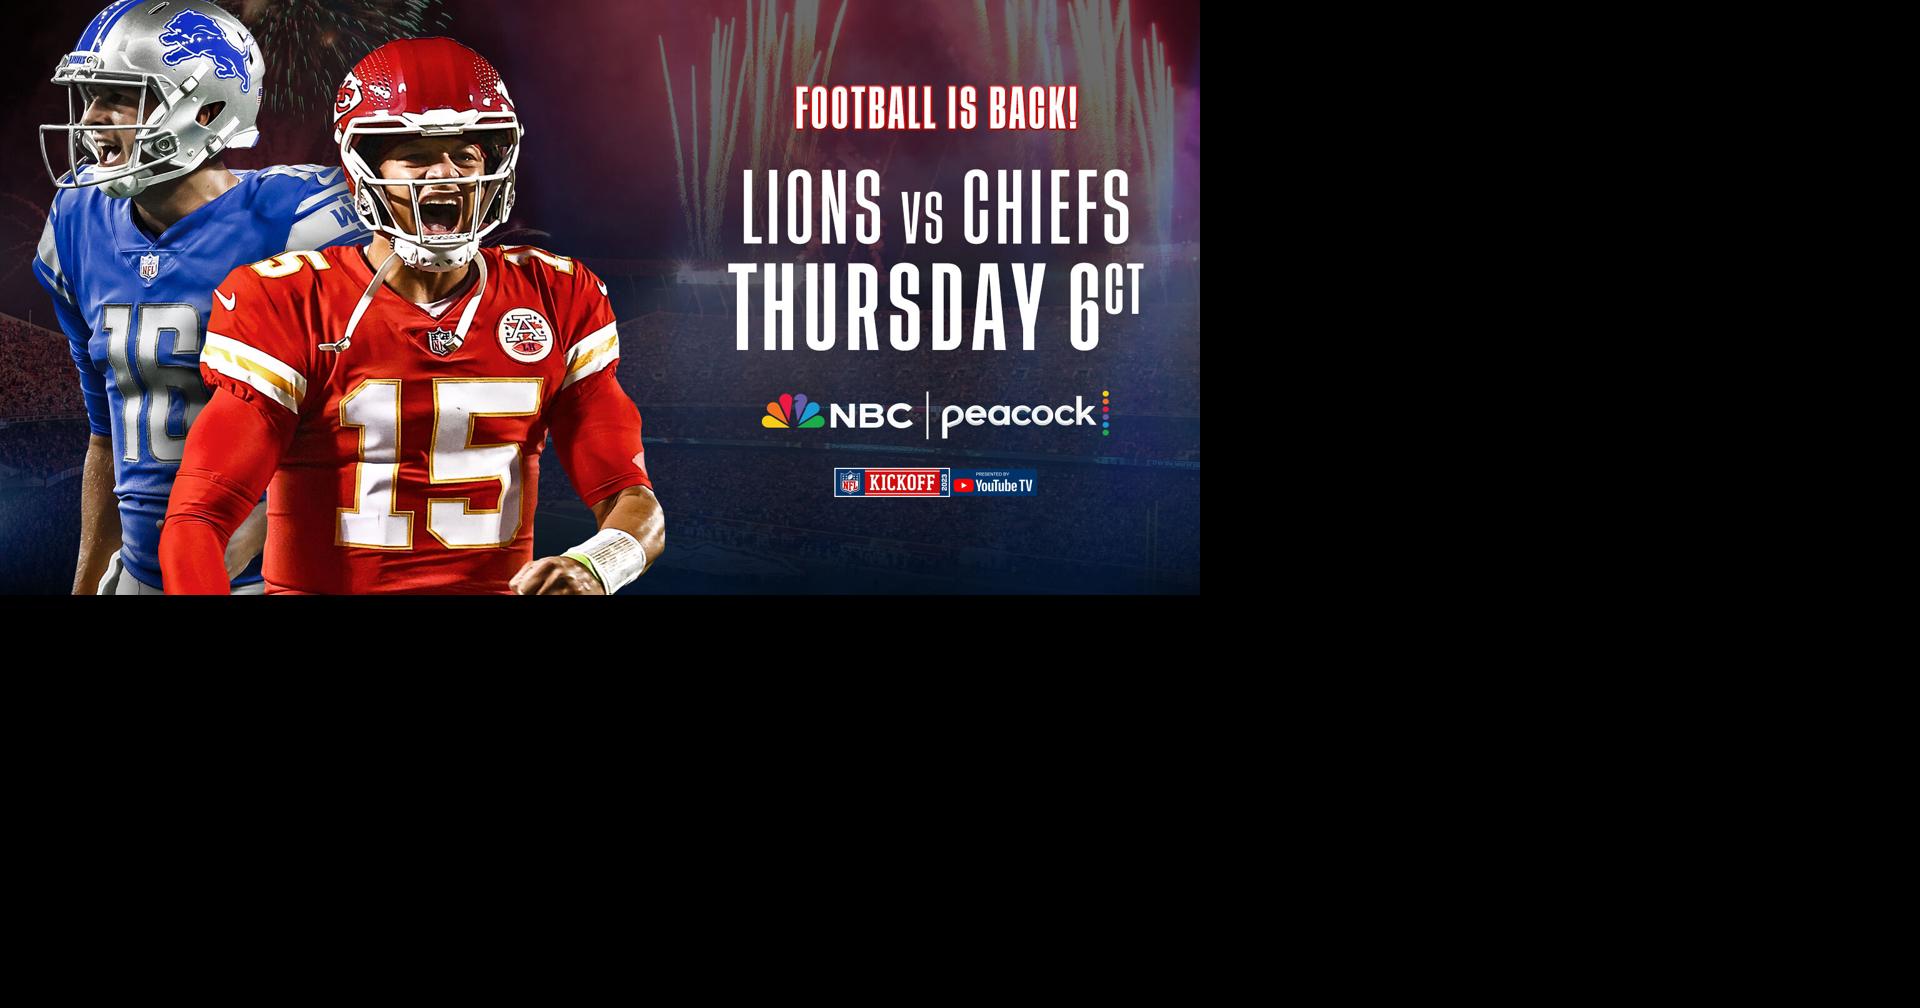 NFL on X: The Sunday Night Slate @SNFonNBC  @Verizon 